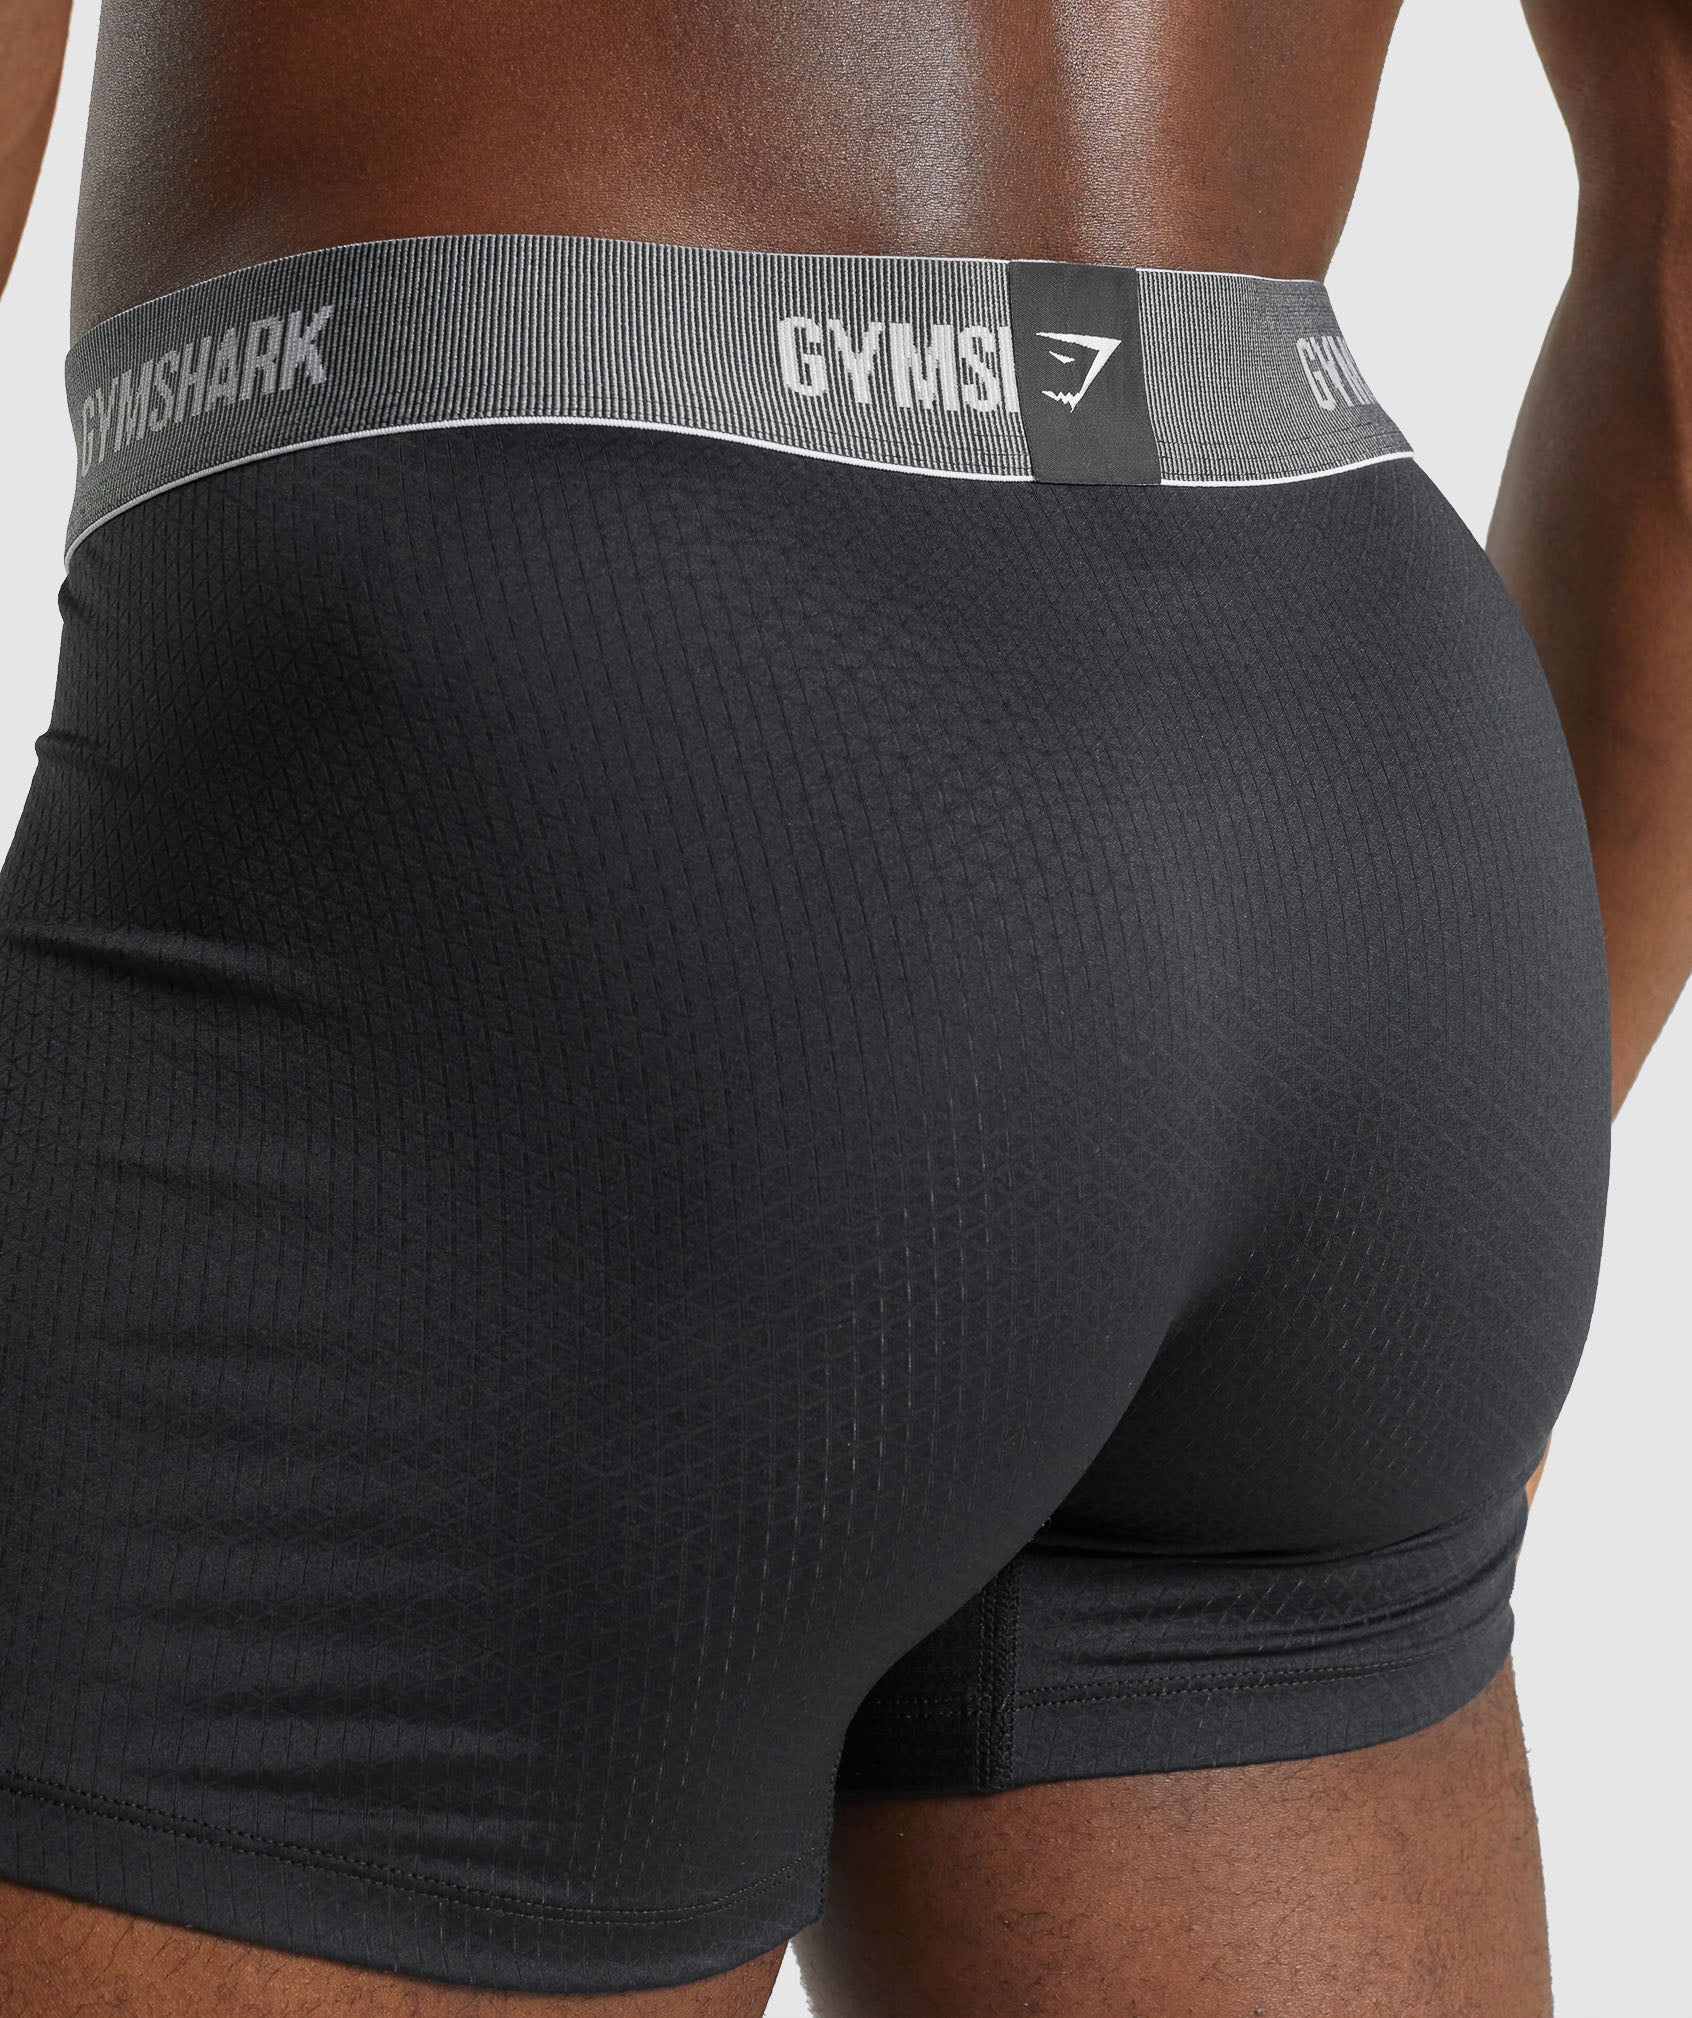 Gymshark Boxers 2pk - White  Gymshark, Second skin, How to look better